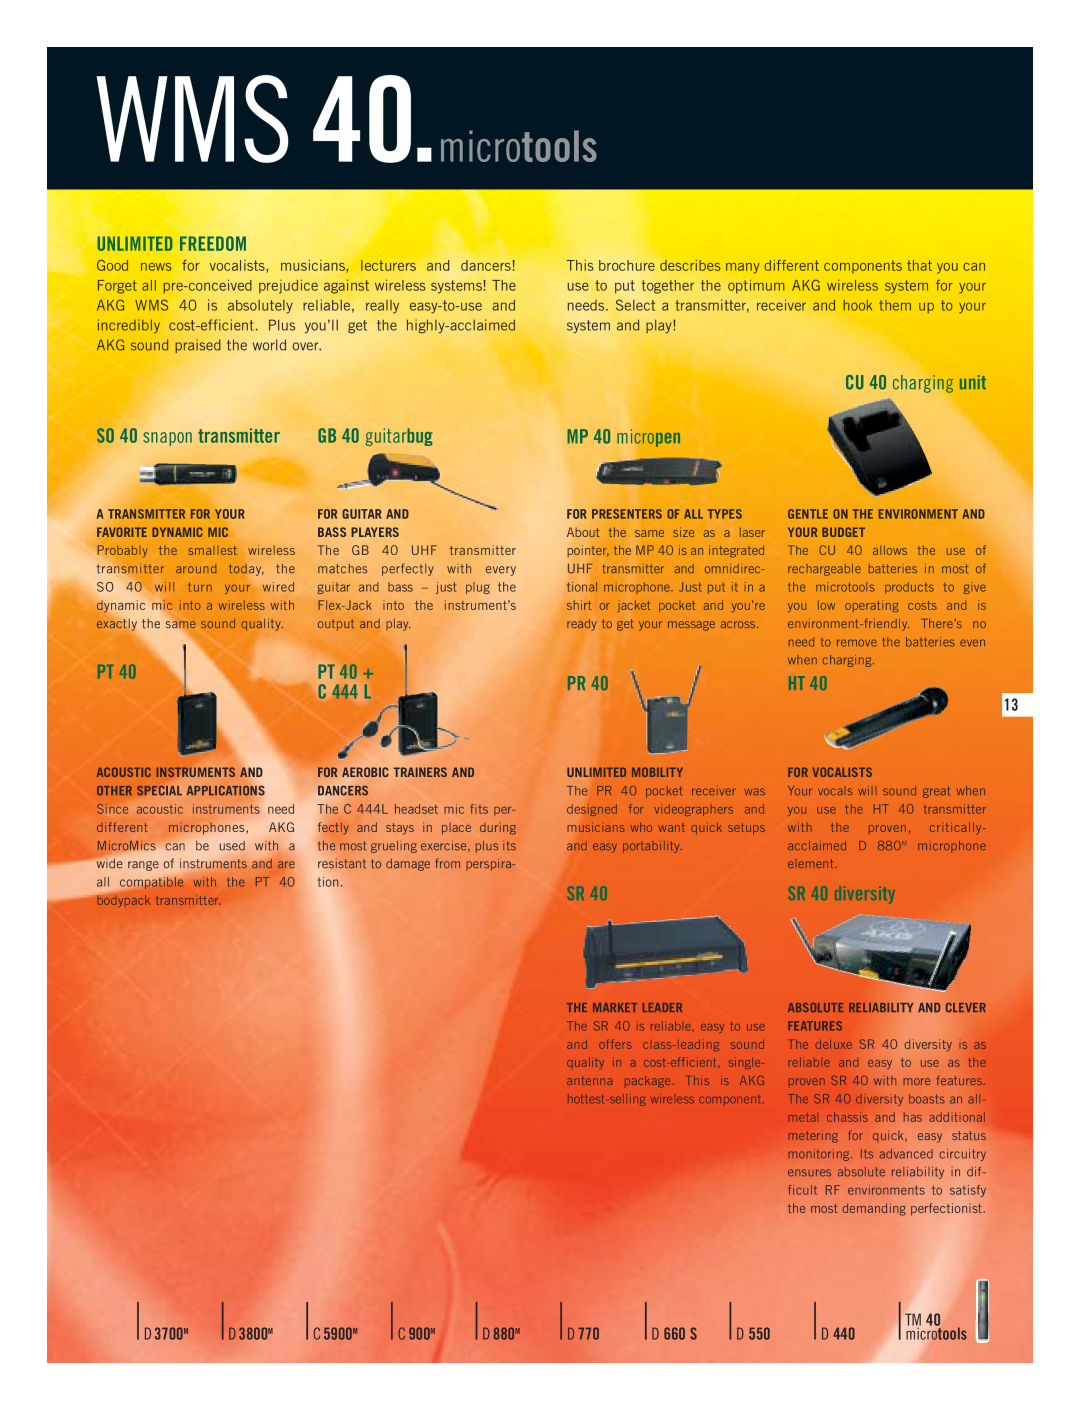 AKG Acoustics D3700M Unlimited Freedom, CU 40 charging unit, GB 40 guitarbug, PT 40 +, C 444 L, SO 40 snapon transmitter 